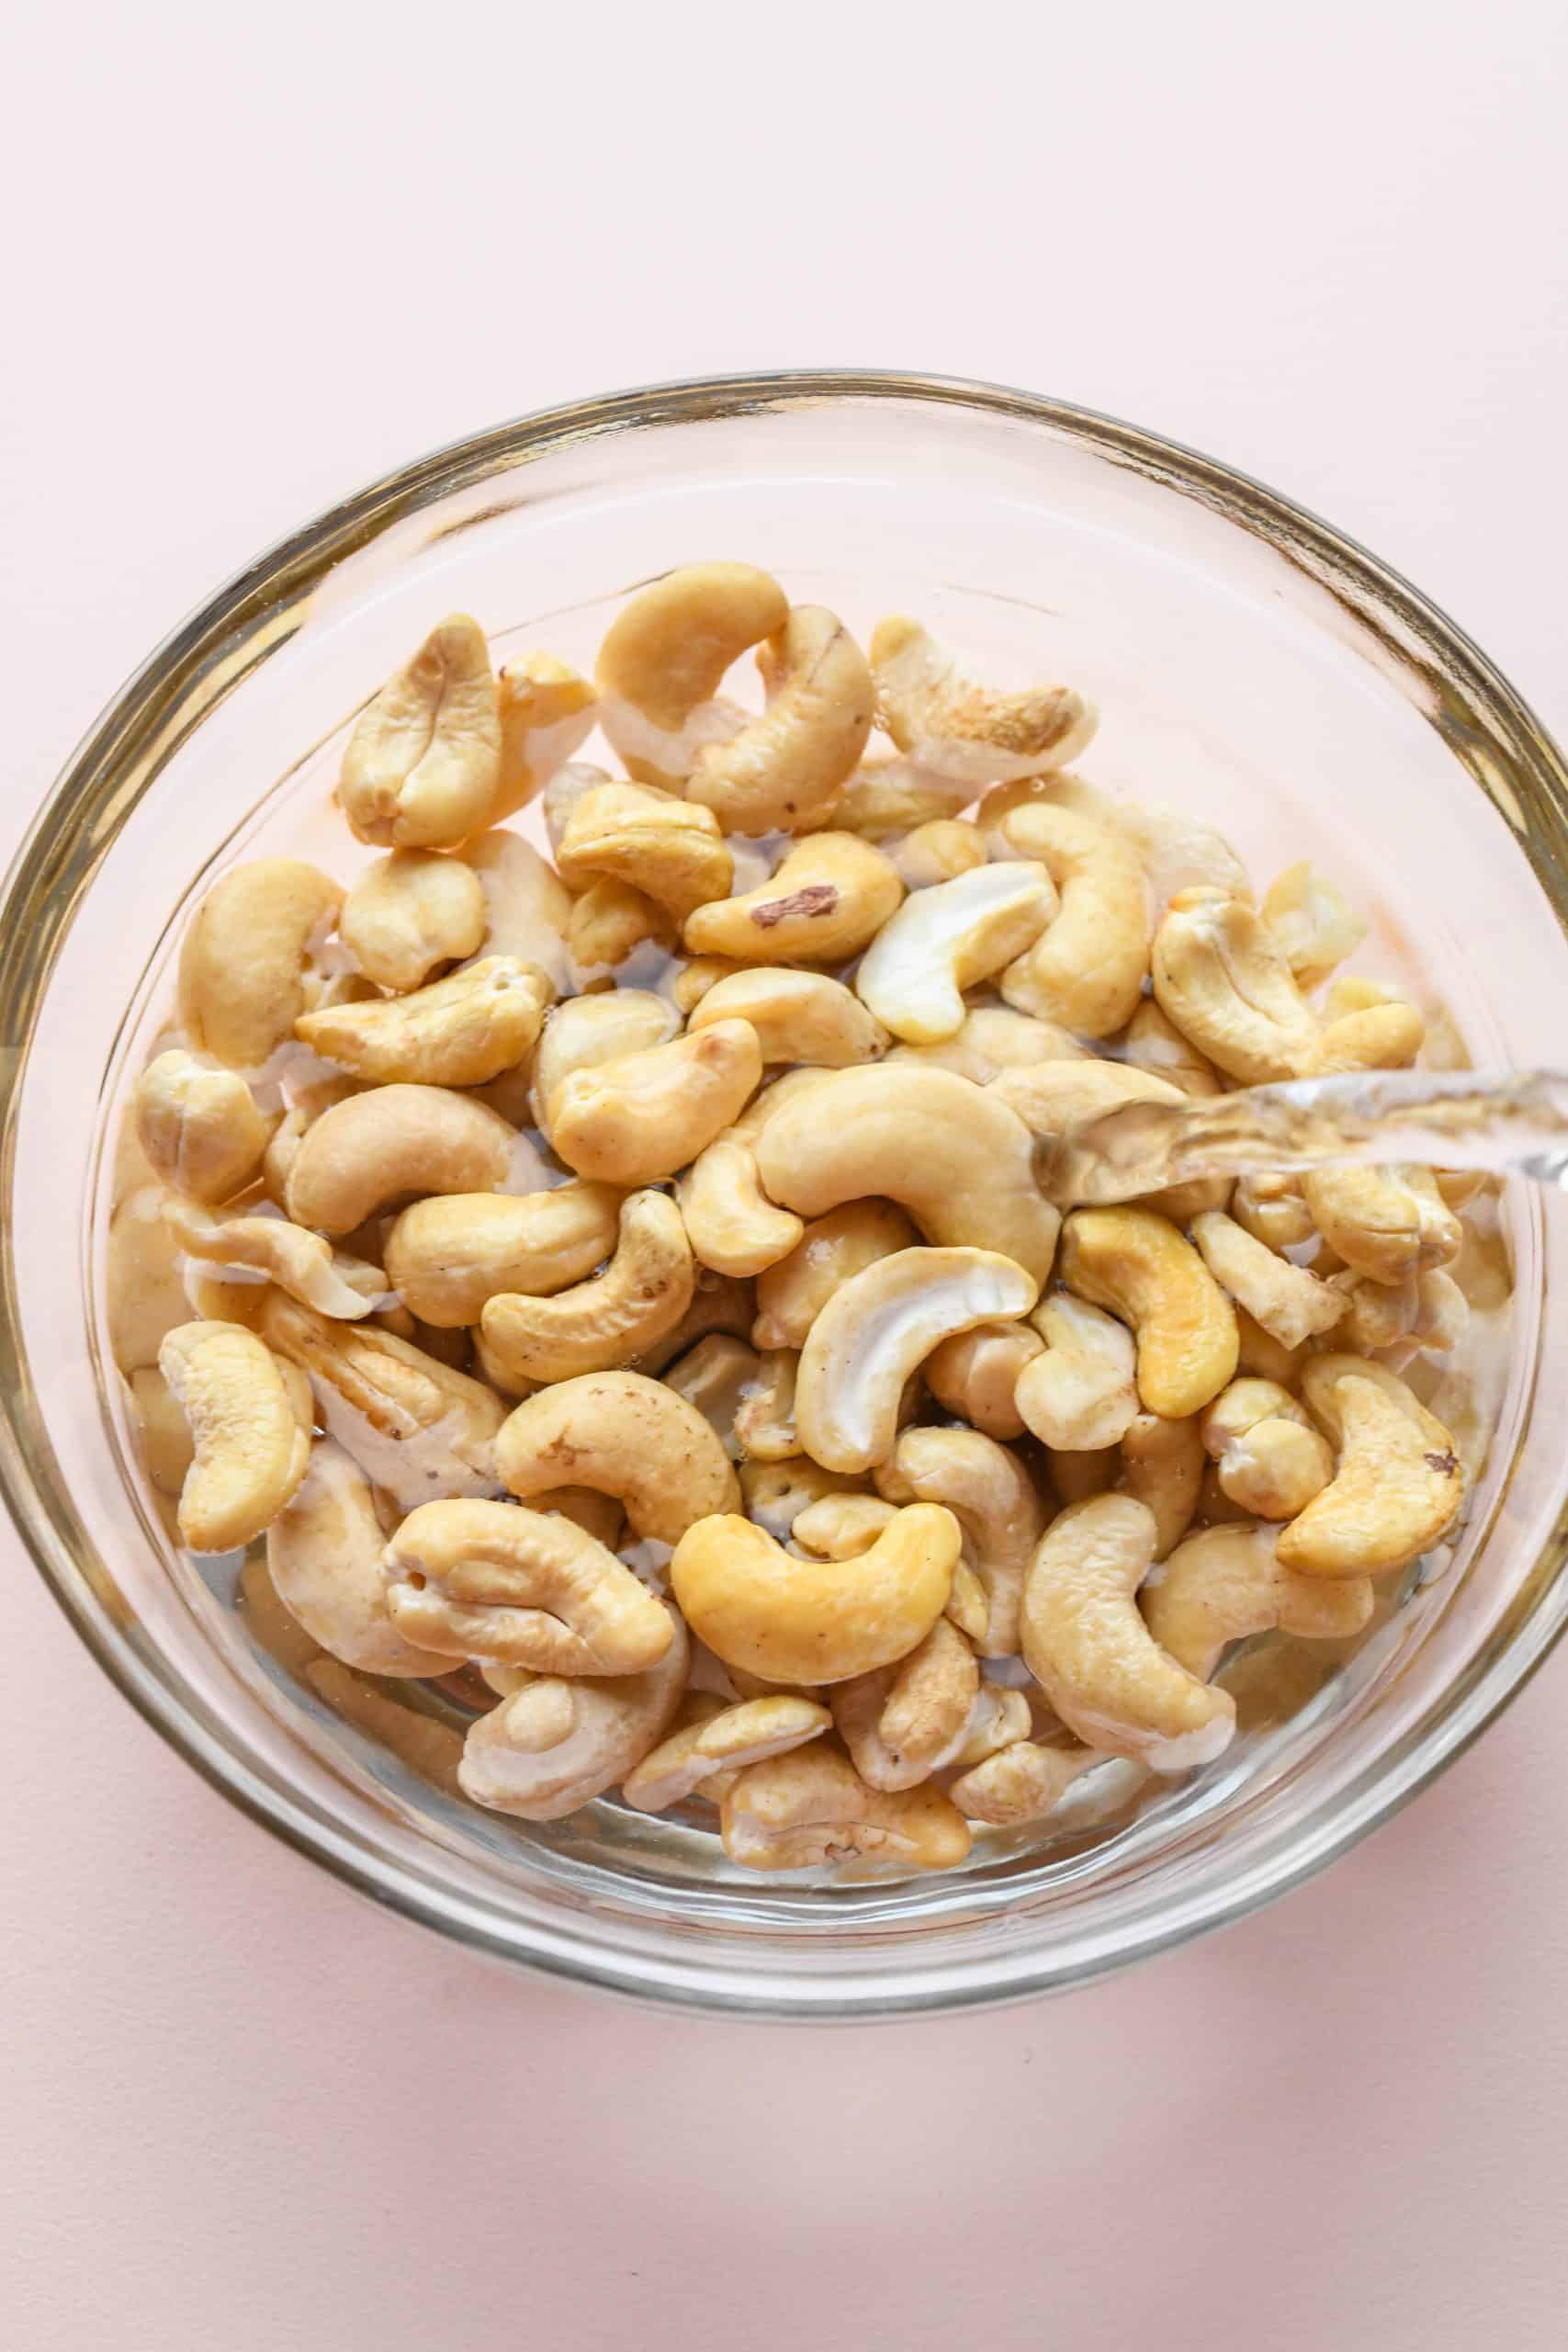 How to make cashew beet dip: Soaking cashews in water.